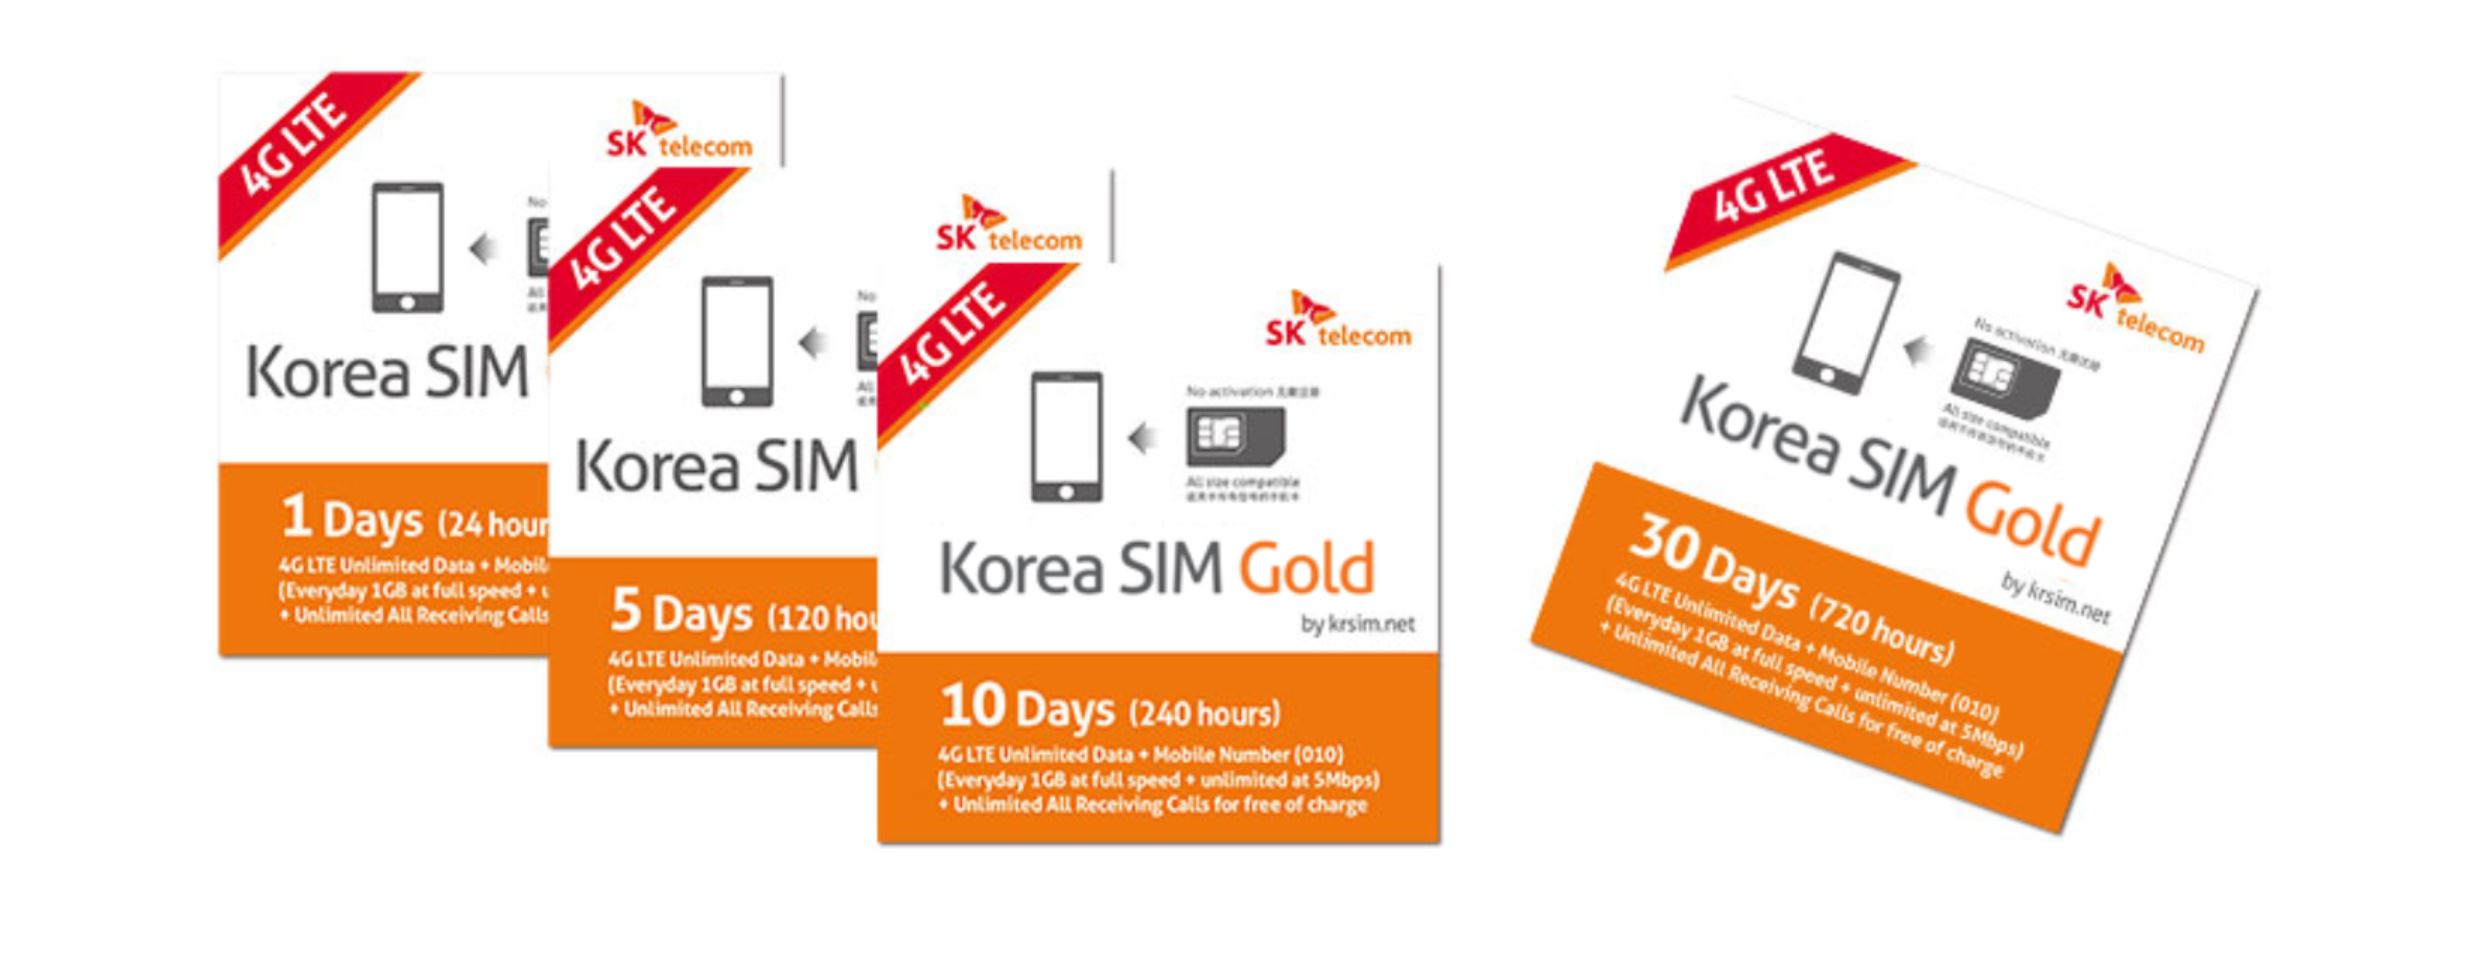 Korean startup Gadget Korea's eSIM Usimsa makes international data roaming  affordable - KoreaTechDesk